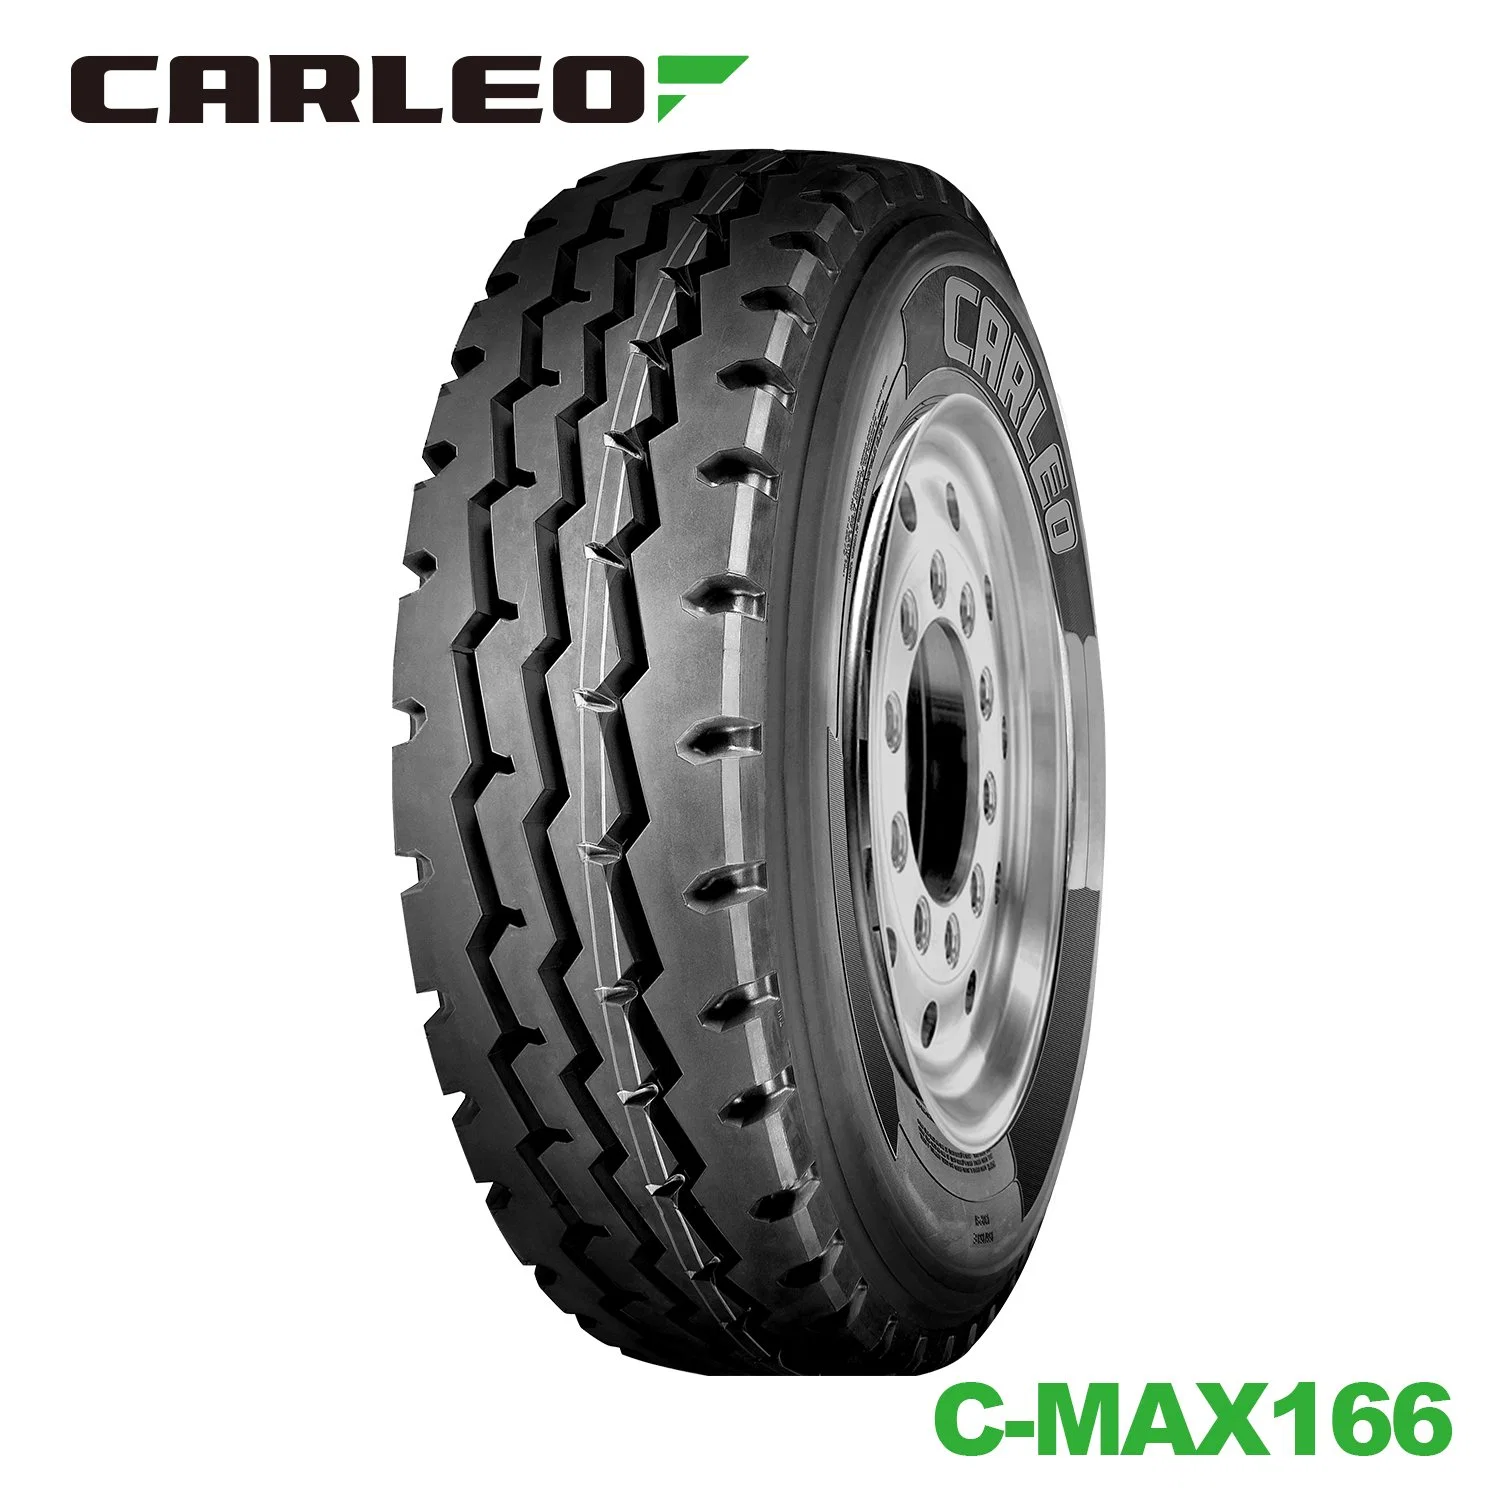 Carleo Truck Bus Tyre, TBR, Light Truck, Steer and Trailer Tyre C-Max166 (7.50R16LT 8.25R16LT...315/80R22.5)